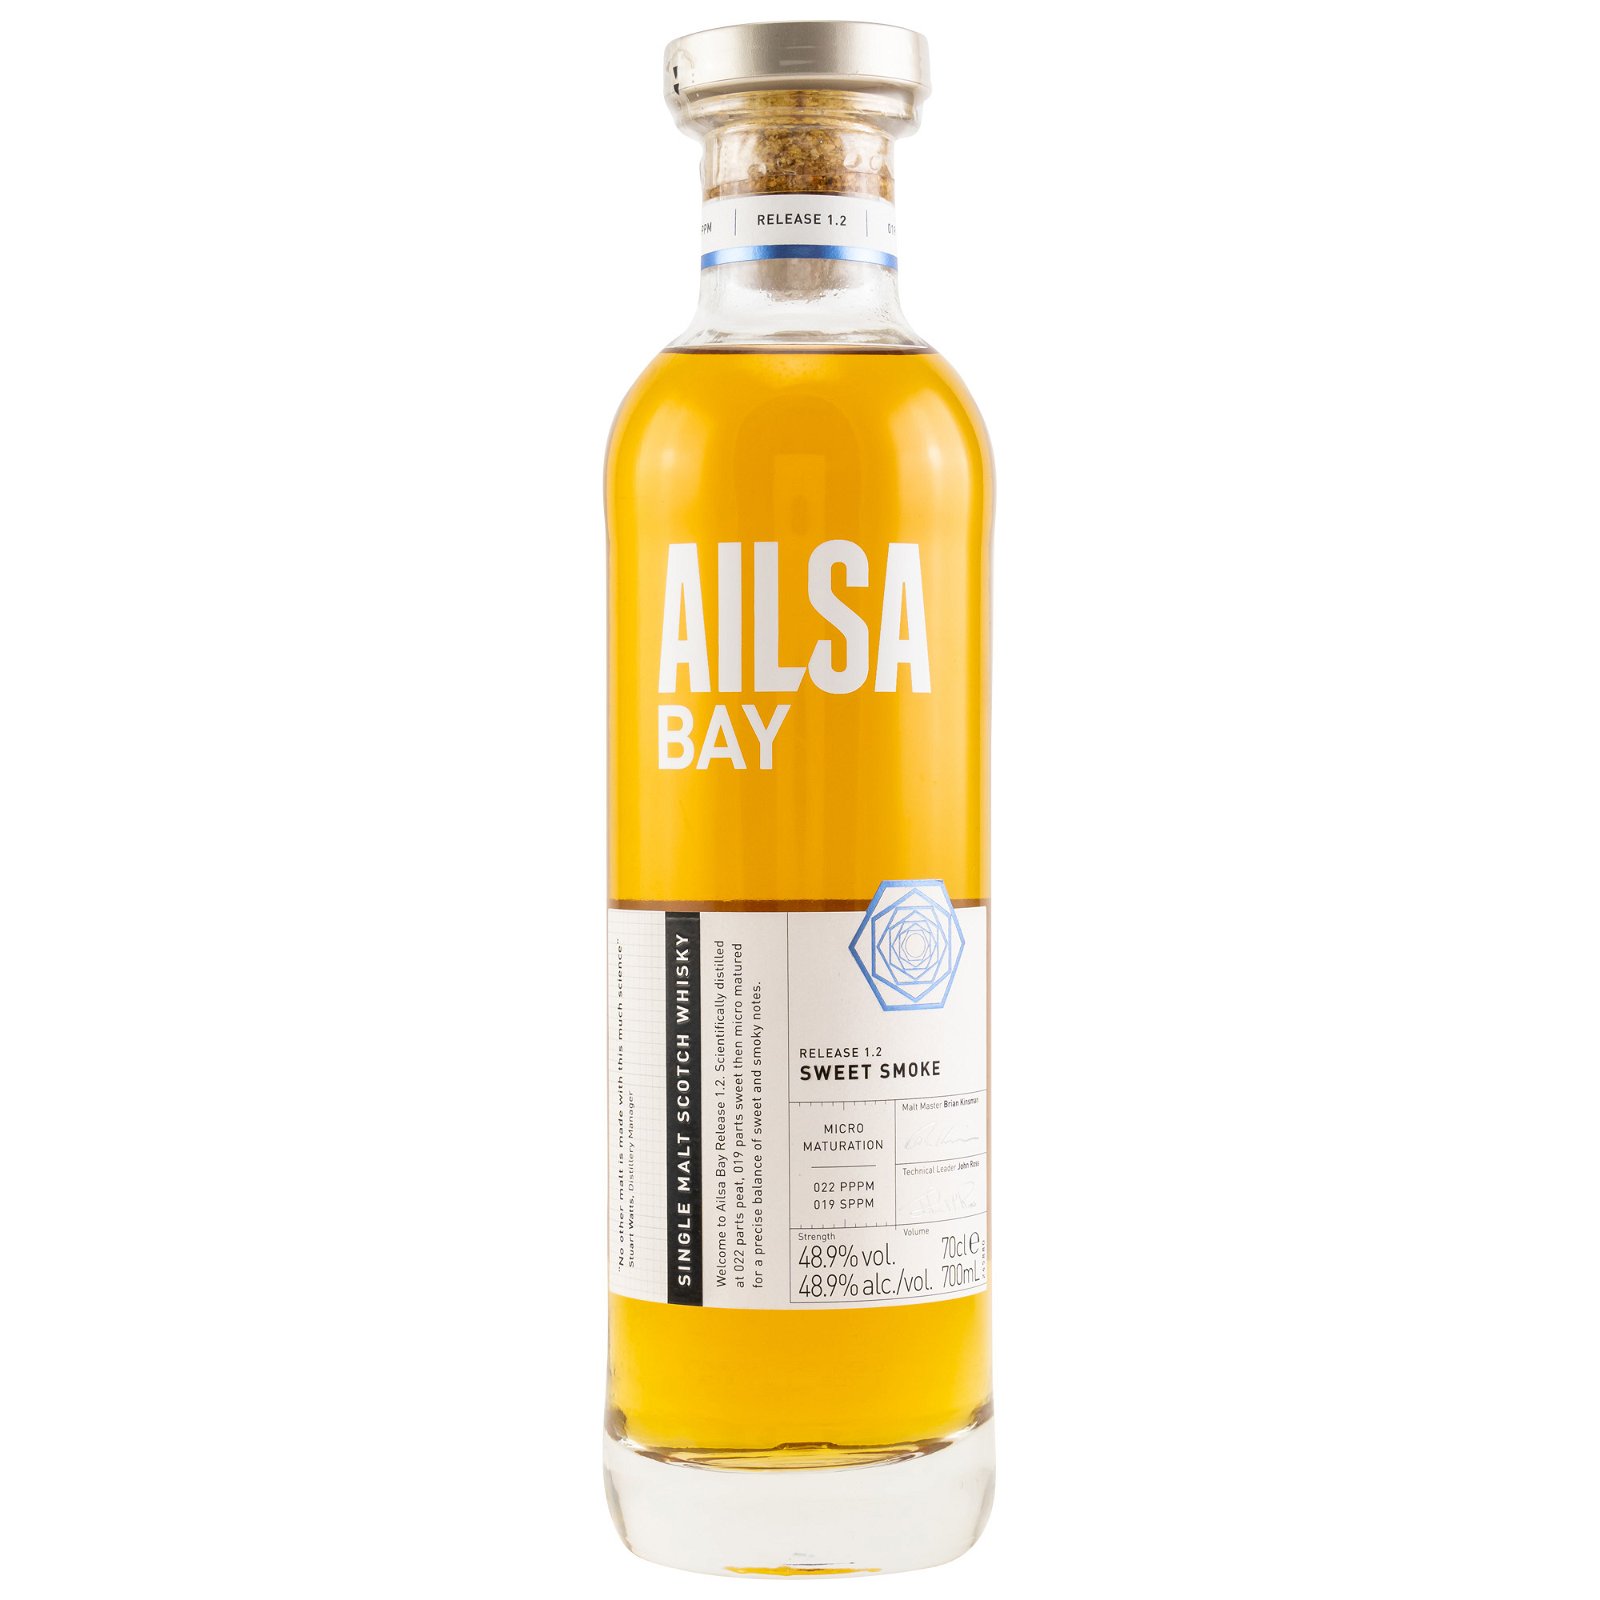 Ailsa Bay Single Malt Whisky Release 1.2 Sweet Smoke